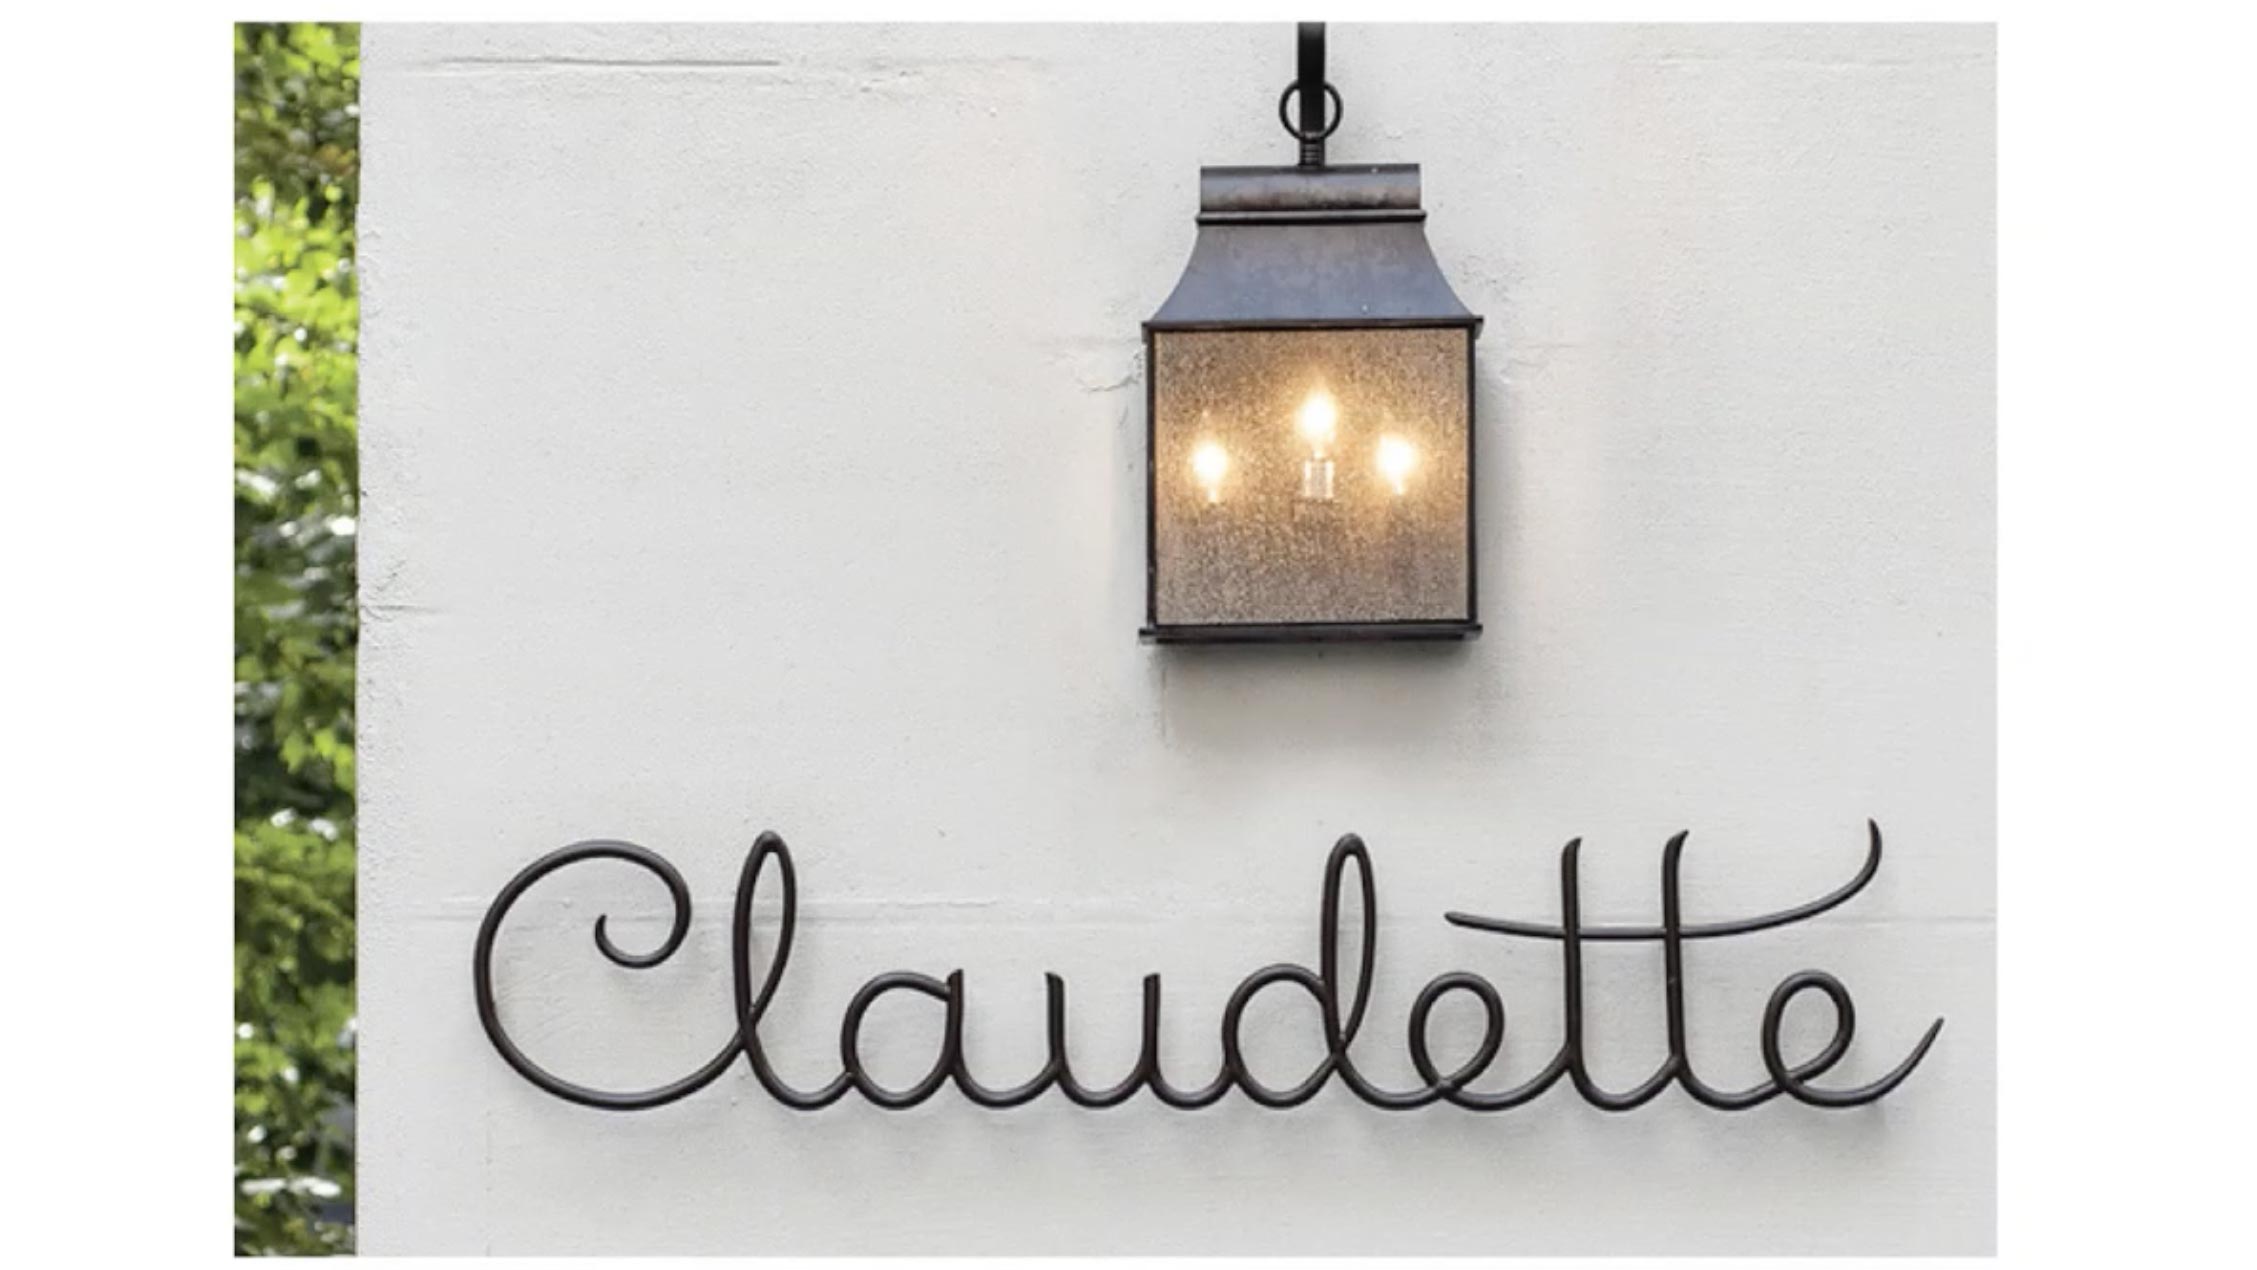 metal sign for Claudette restaurant